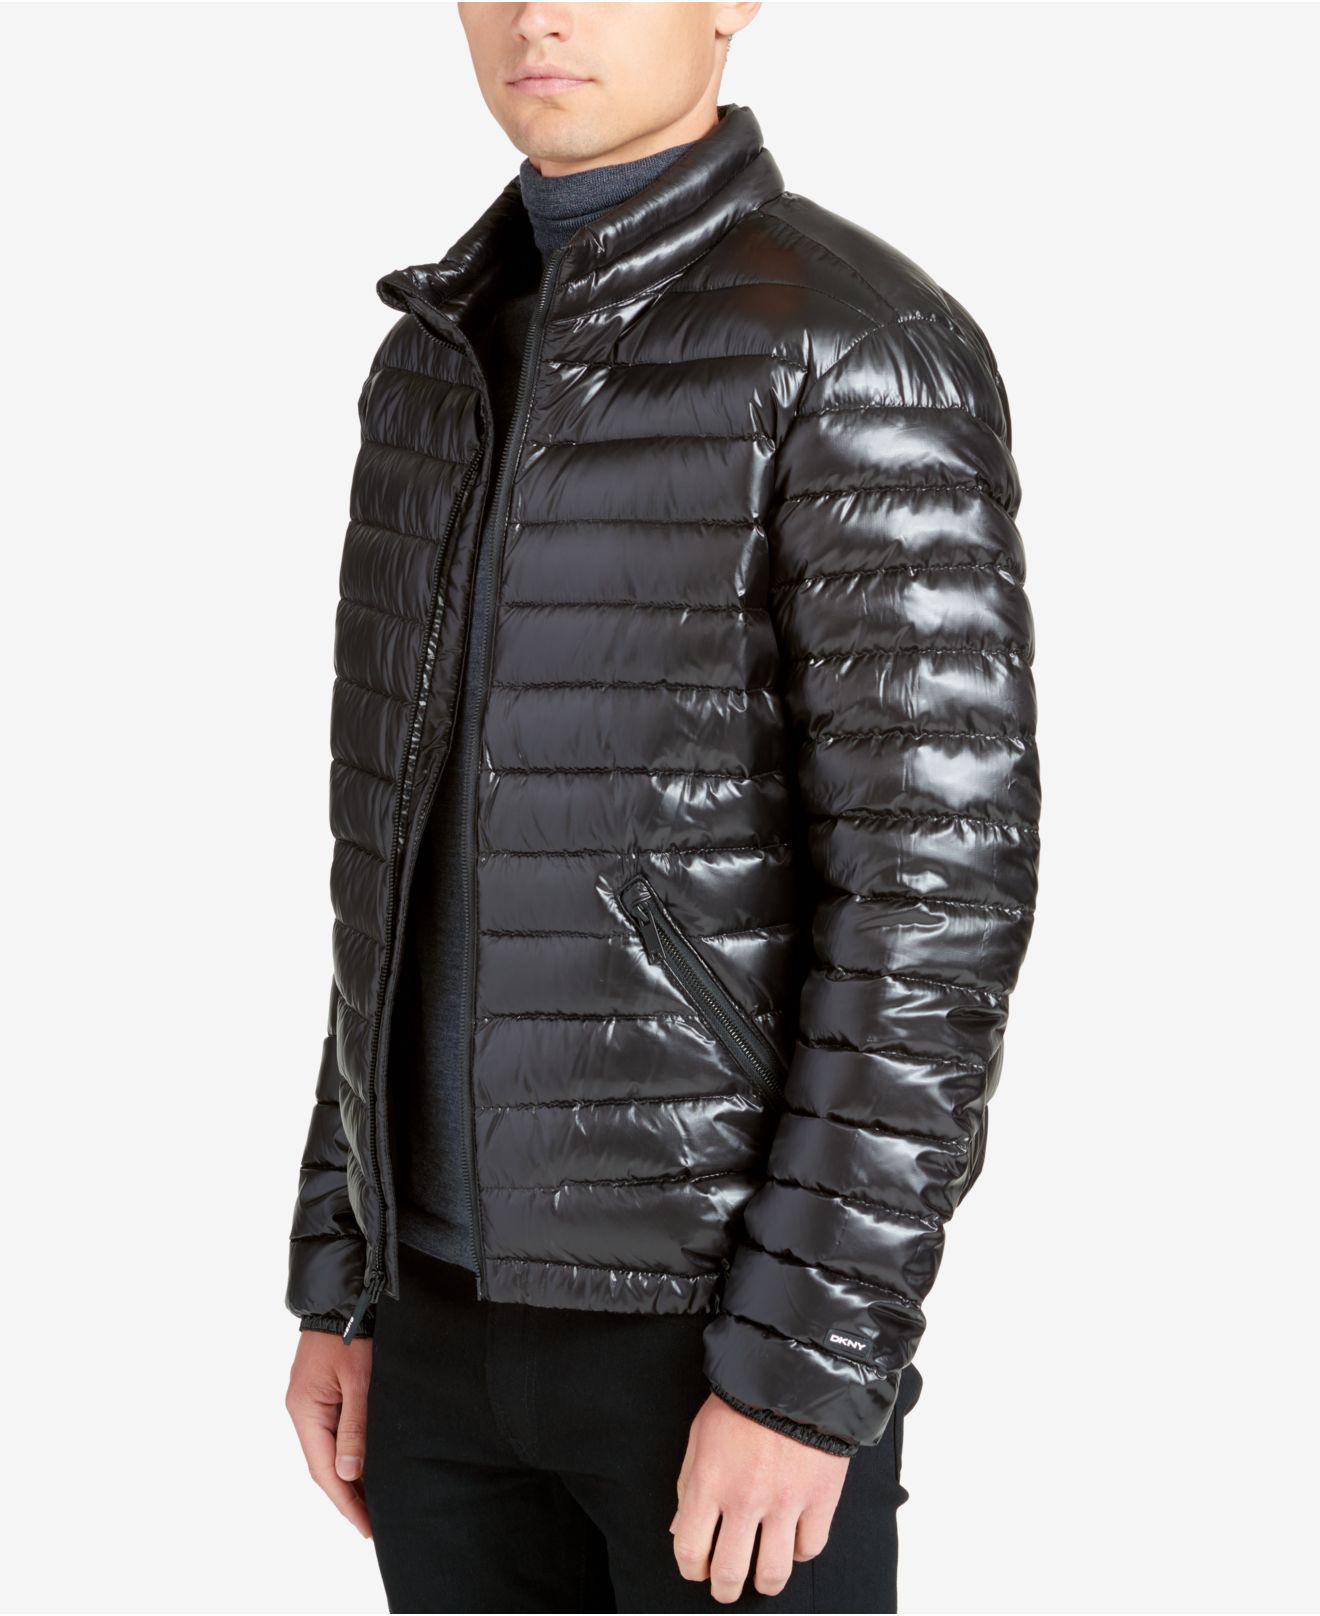 DKNY Men's Packable Puffer Jacket in Black for Men - Lyst